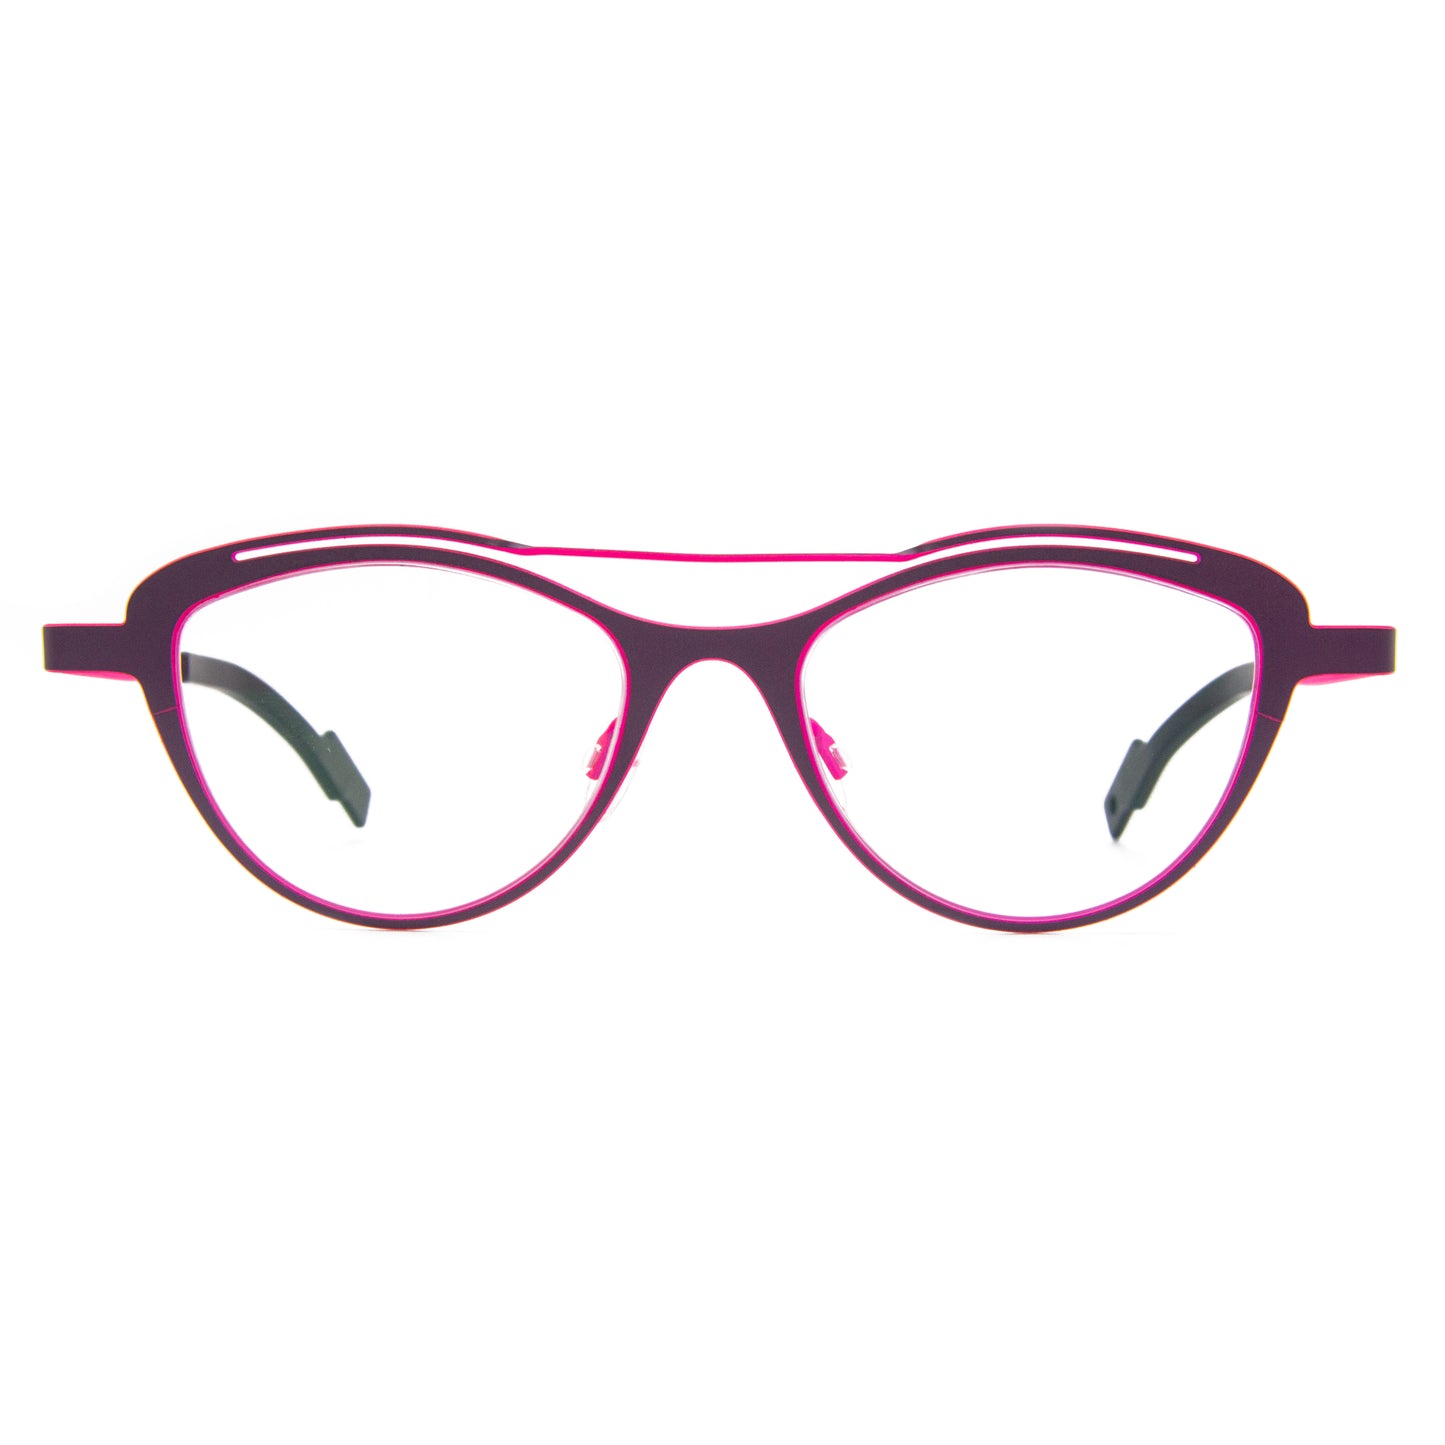 Theo - Eyewear - Carve - 375 - Glasses